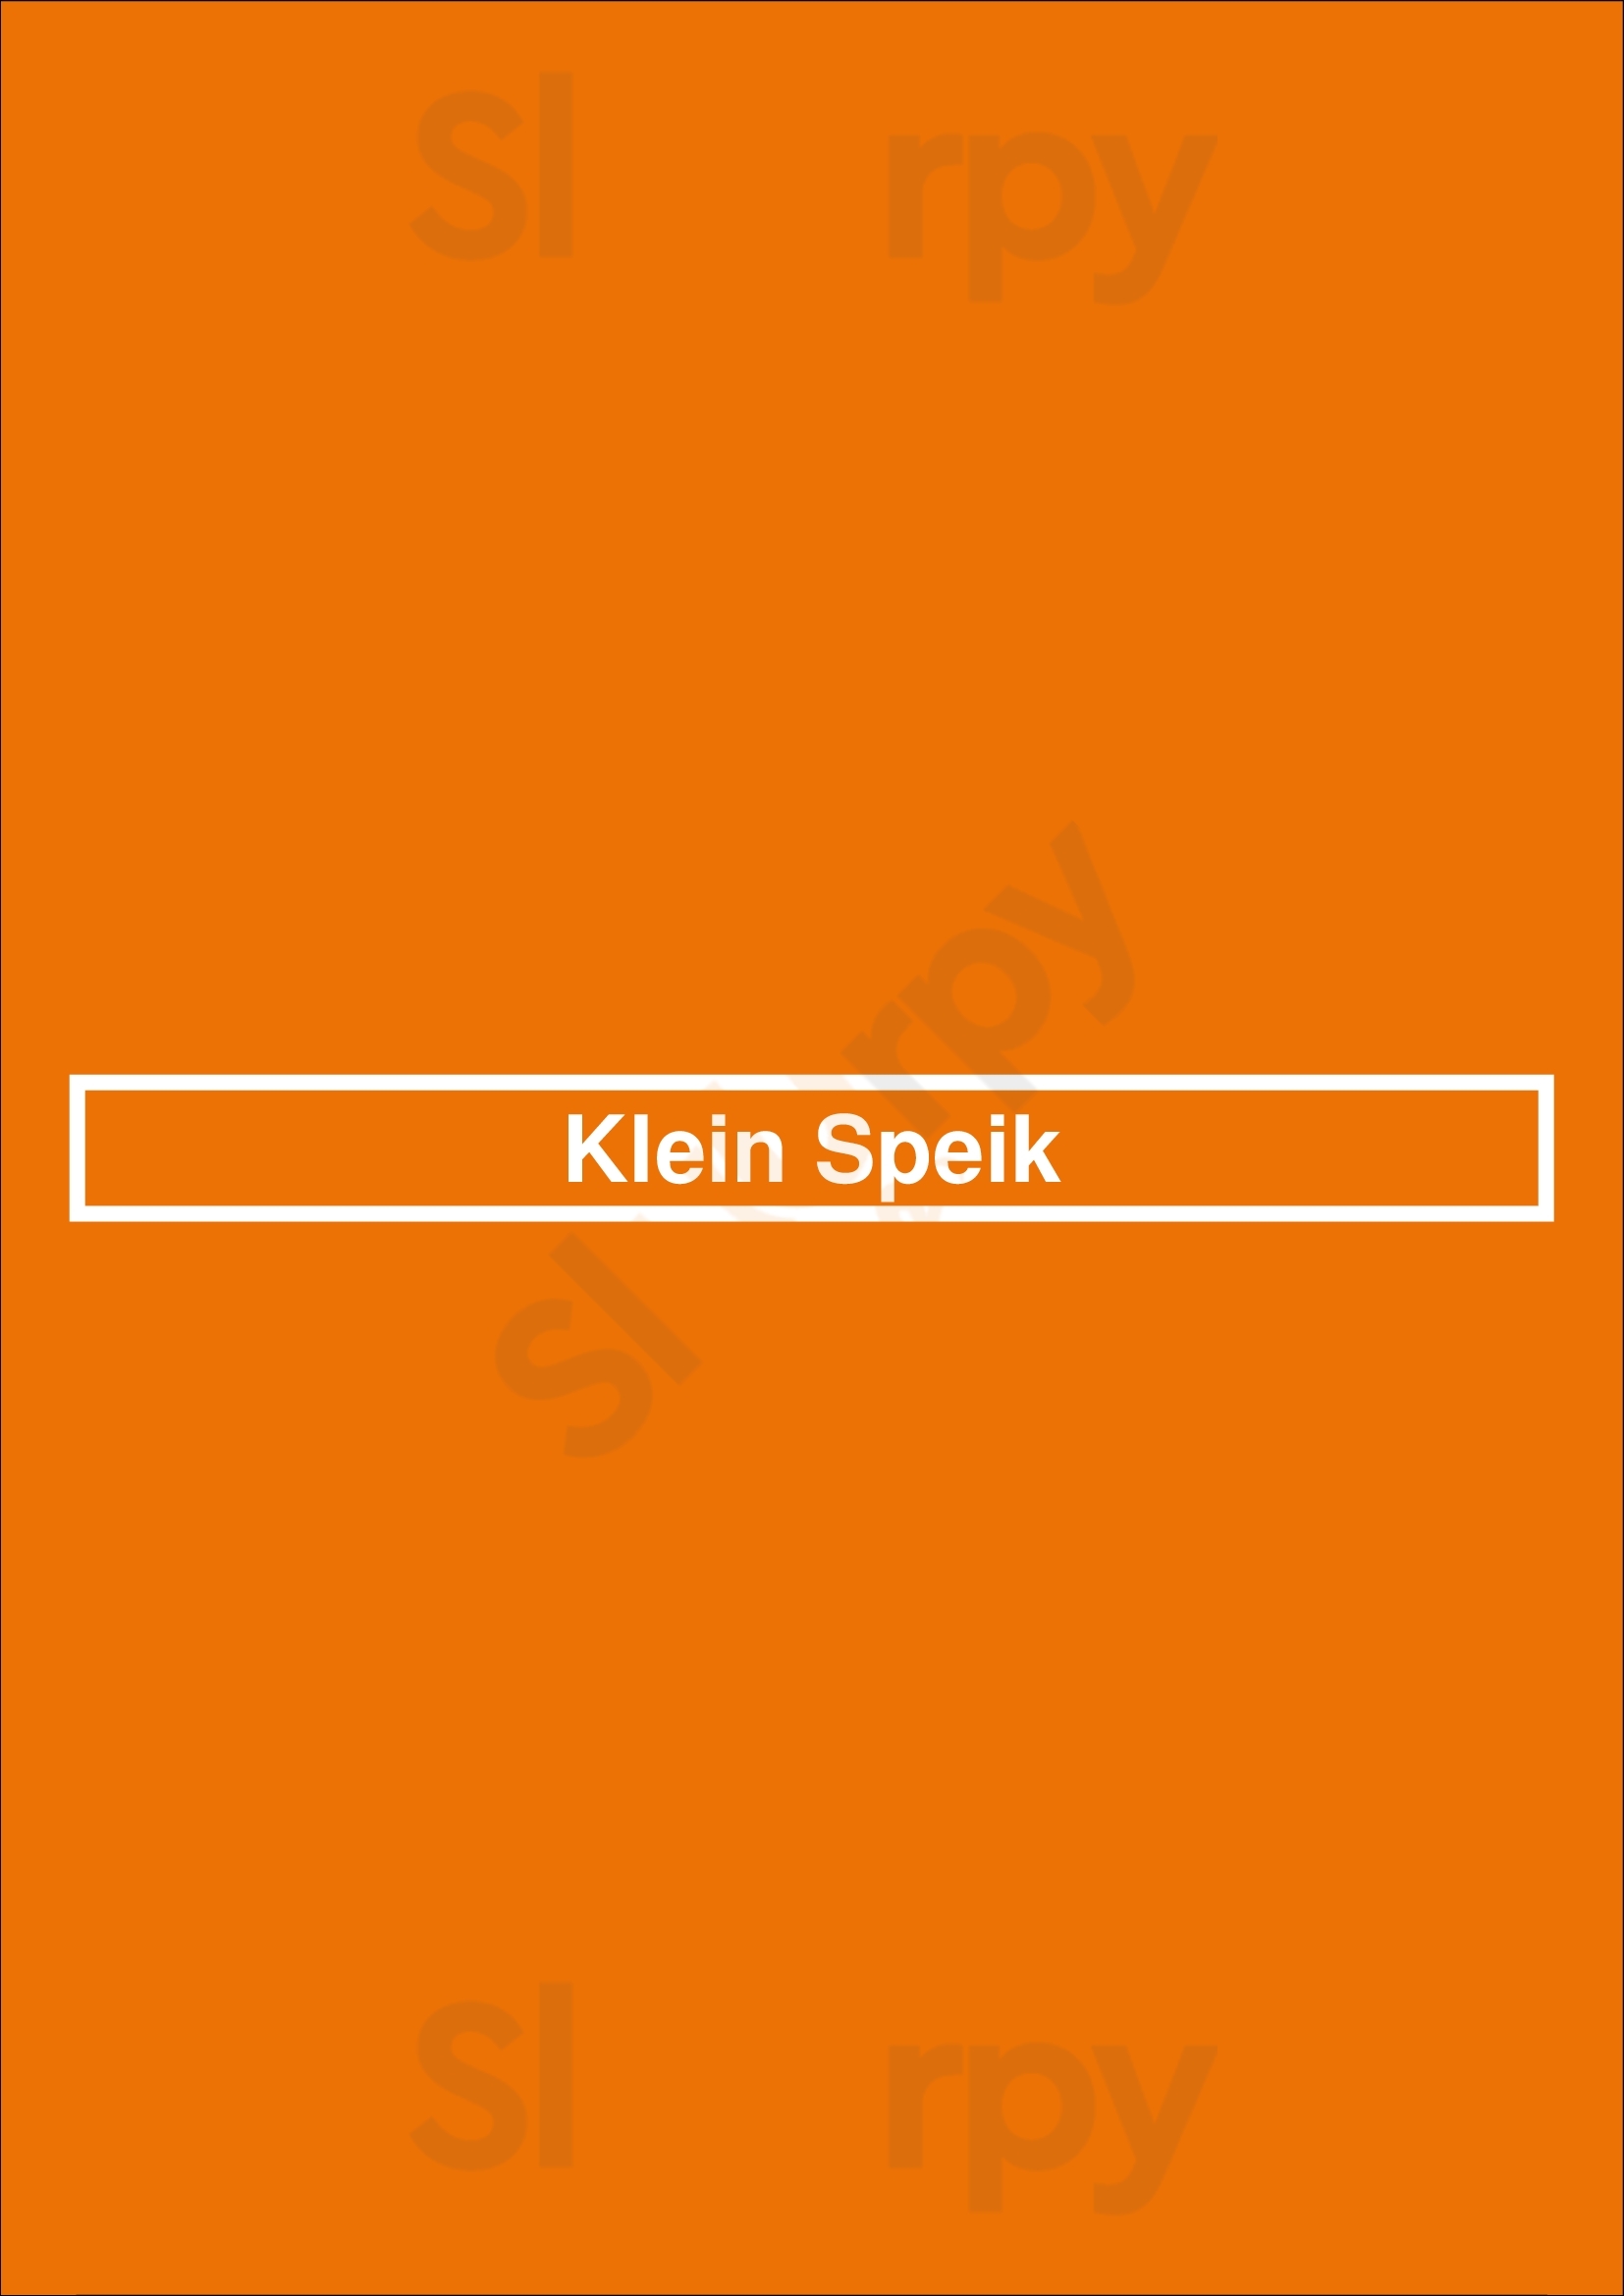 Klein Speik Oisterwijk Menu - 1